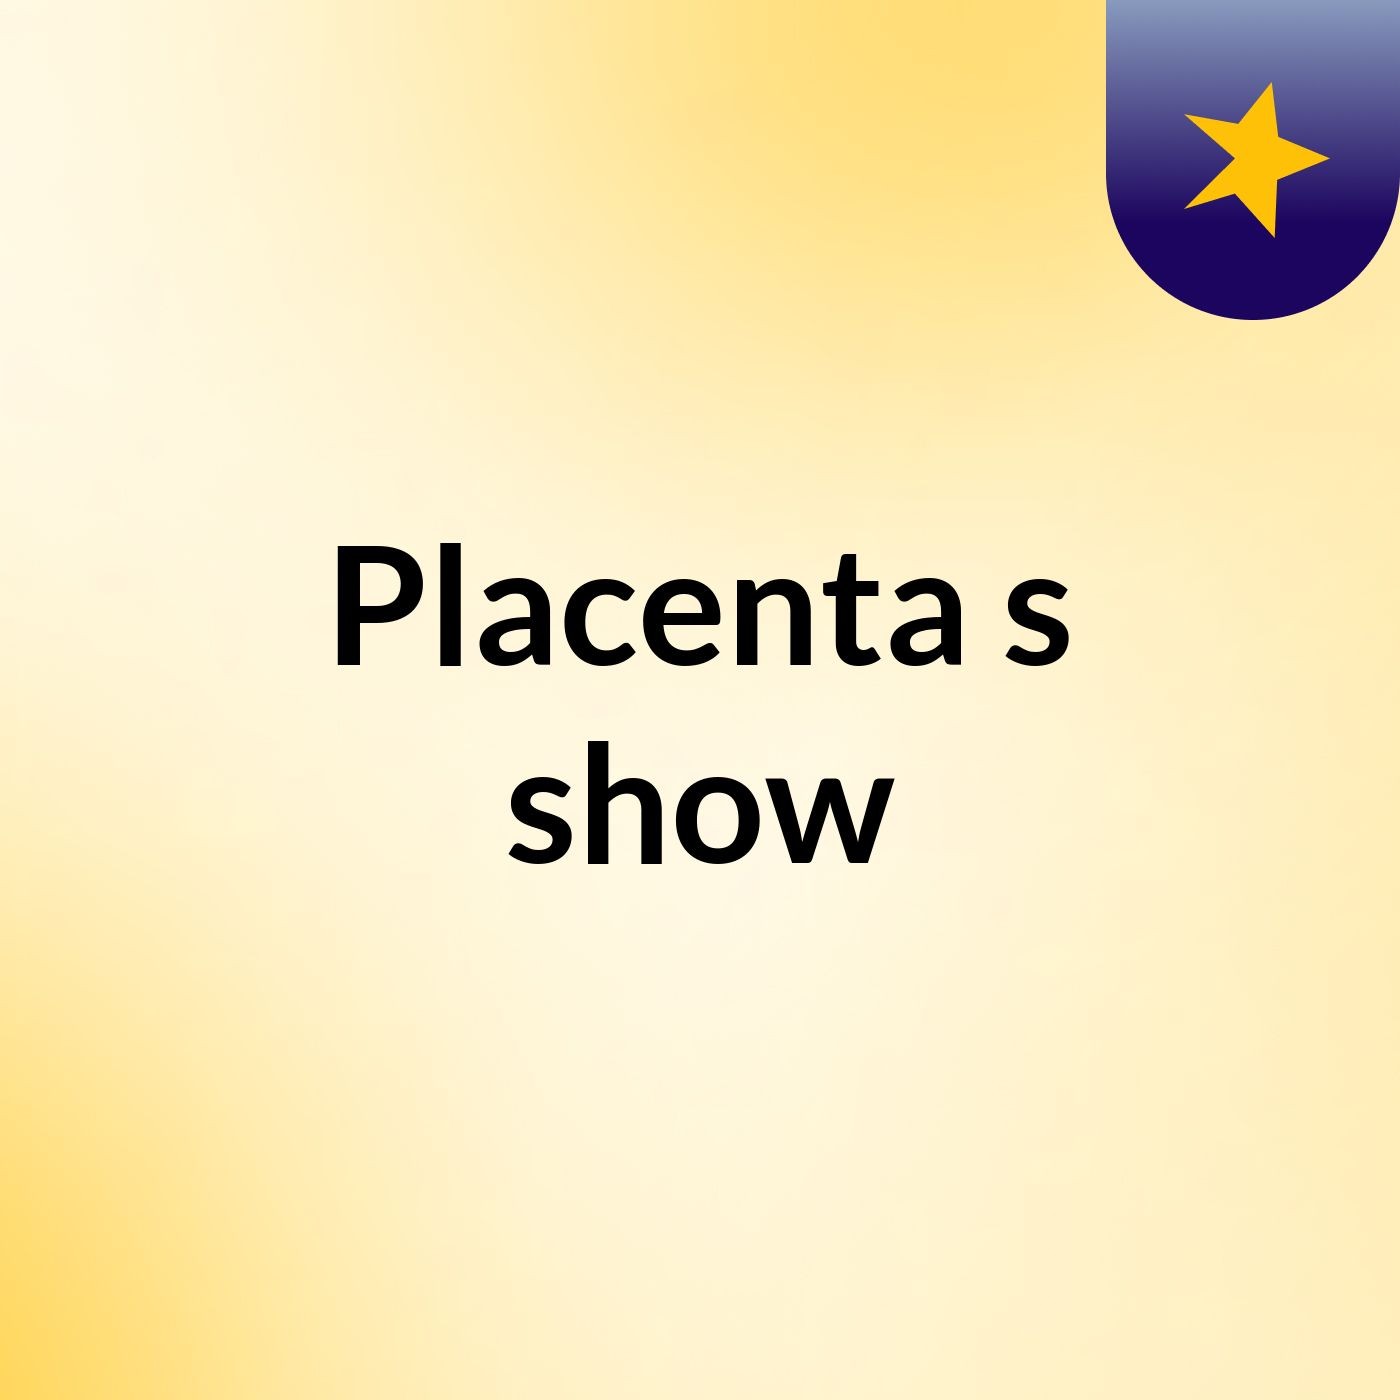 Placenta's show